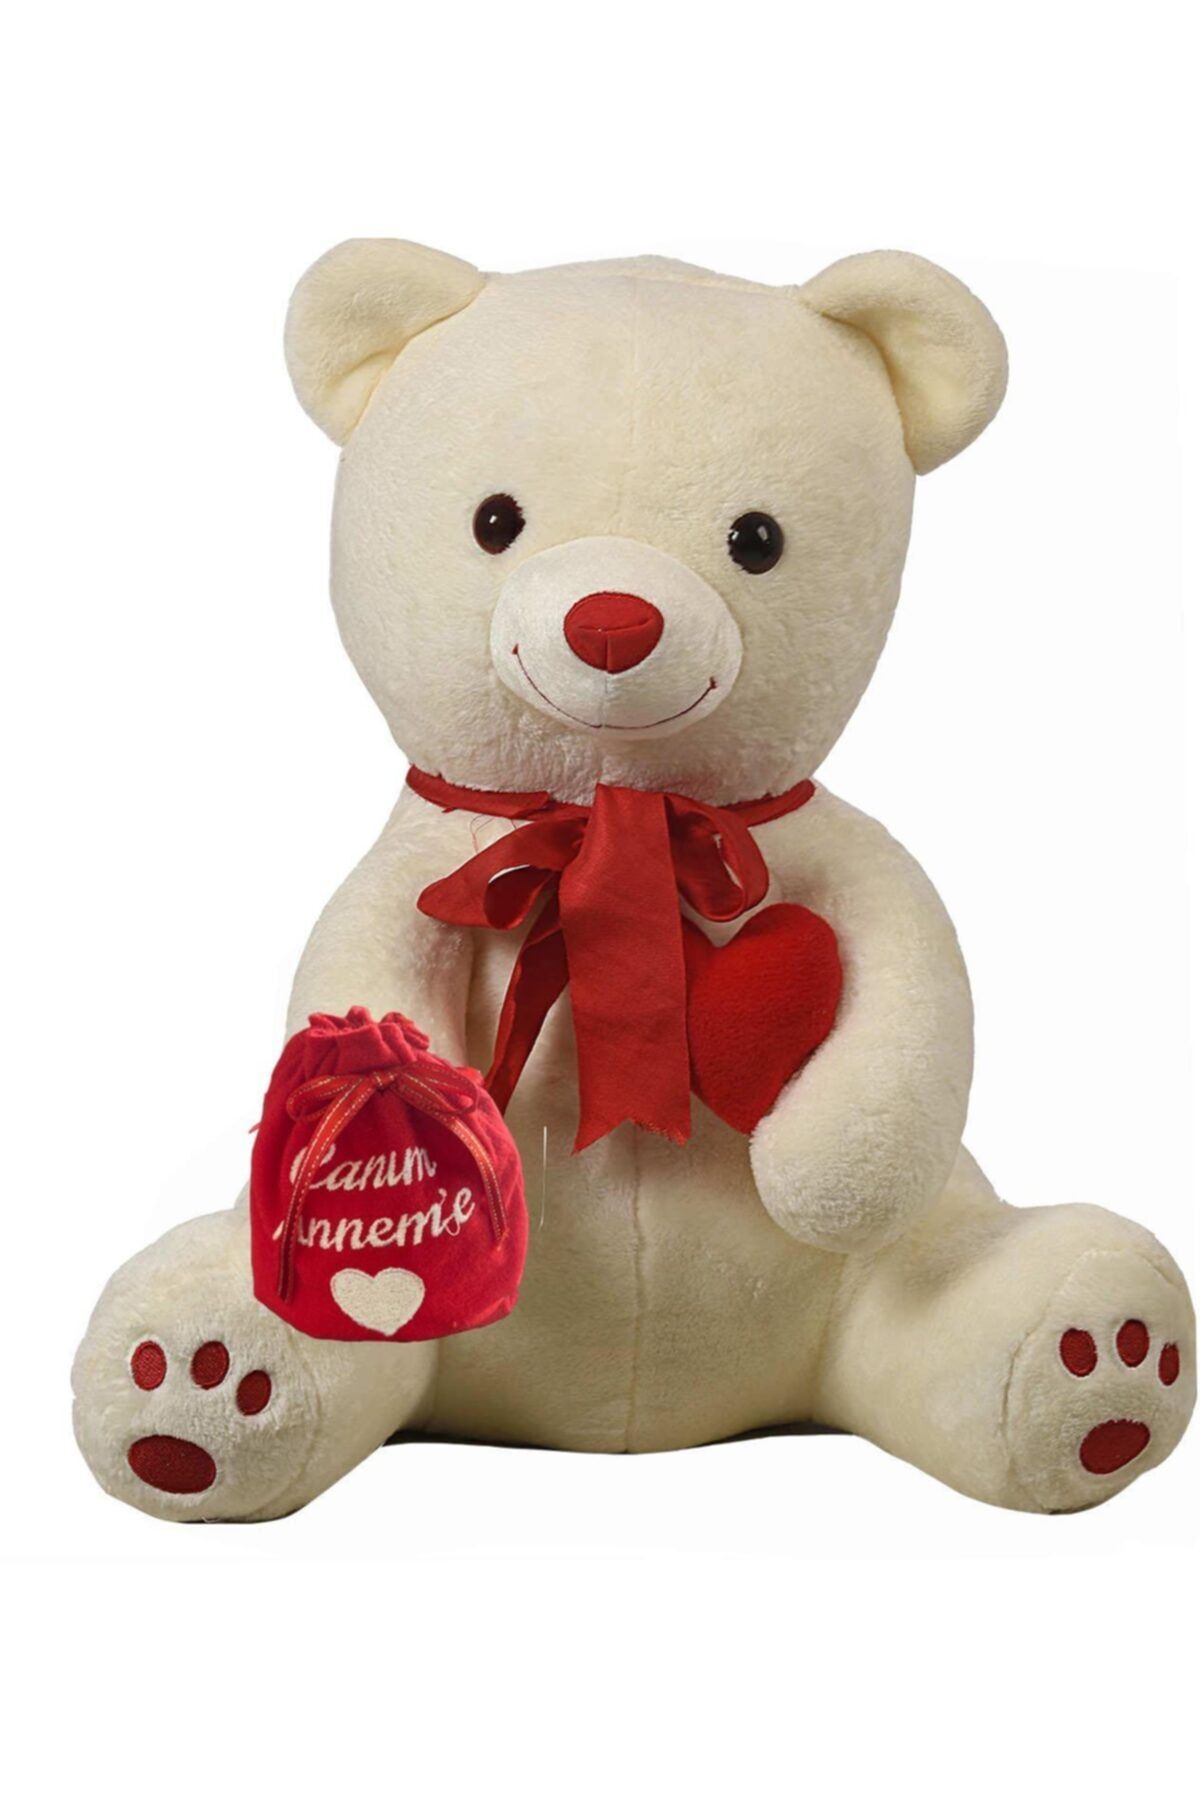 Sole ویژه روز مادر: شکلاتی "به مادر عزیزم" خرس رمانتیک ANNEMEB3